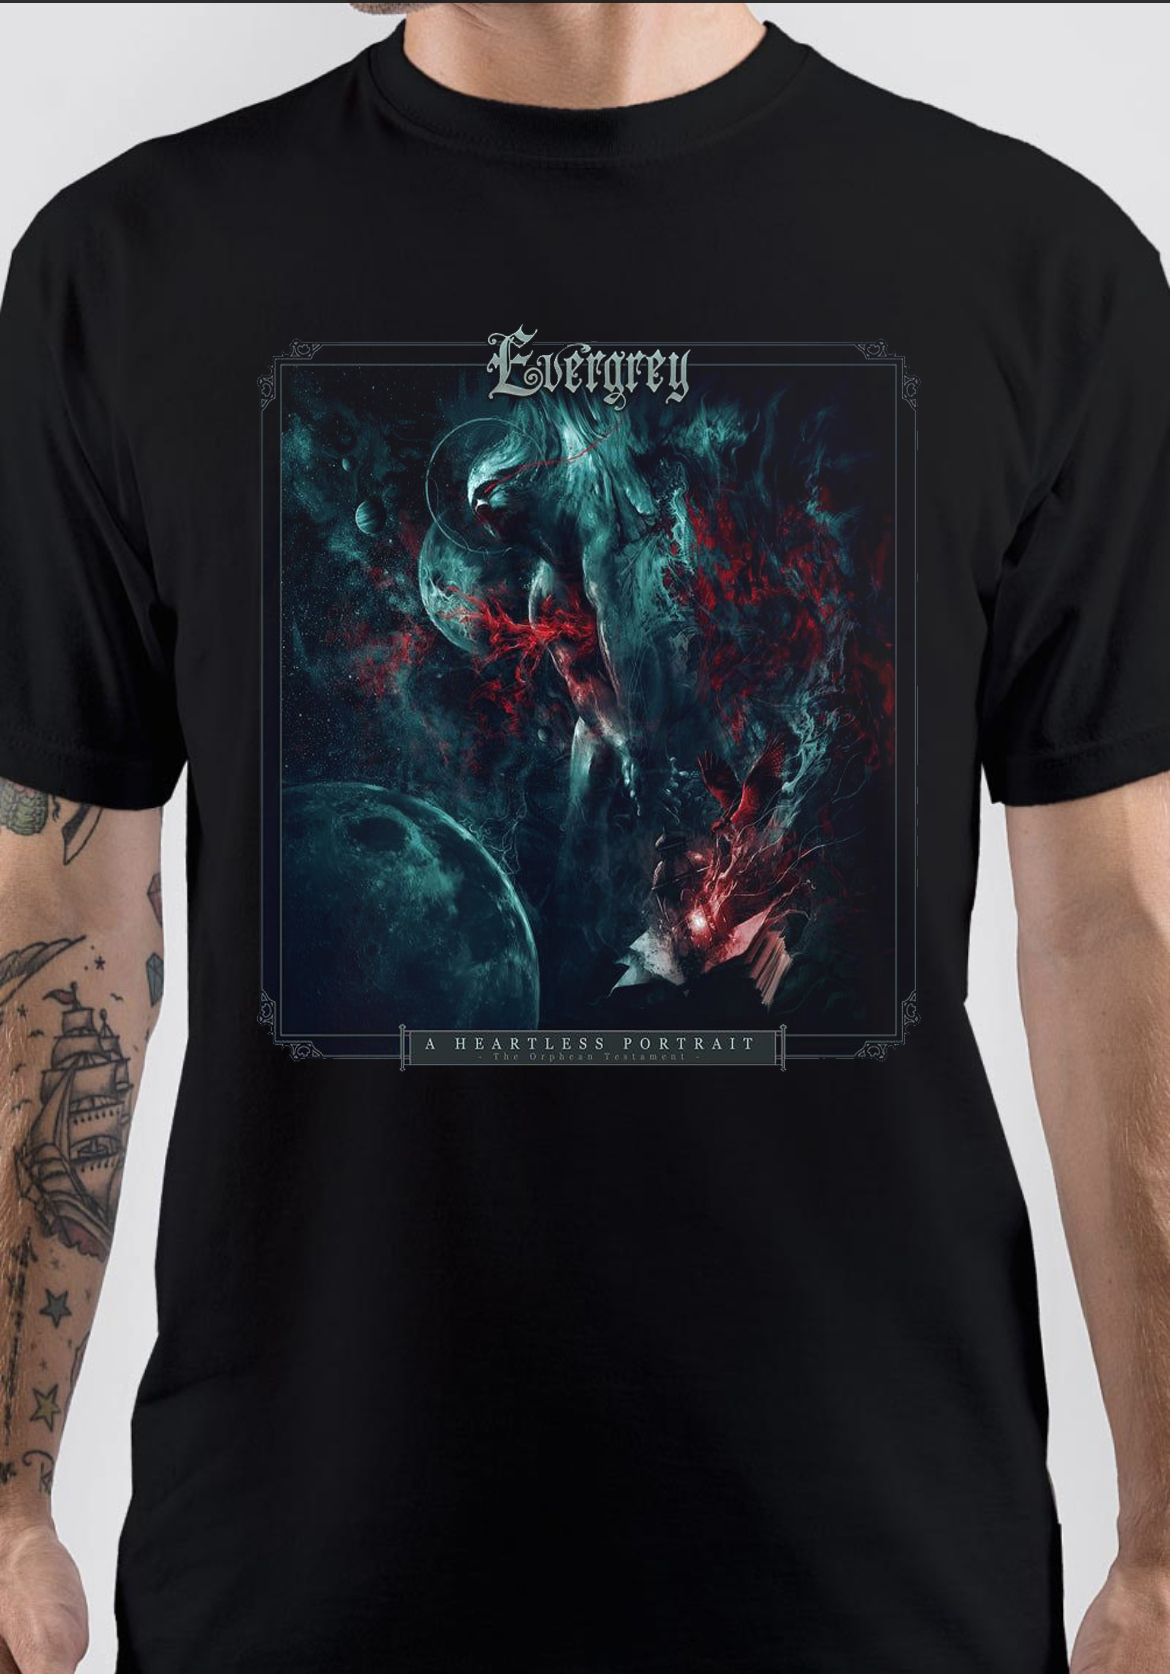 Evergrey T-Shirt And Merchandise